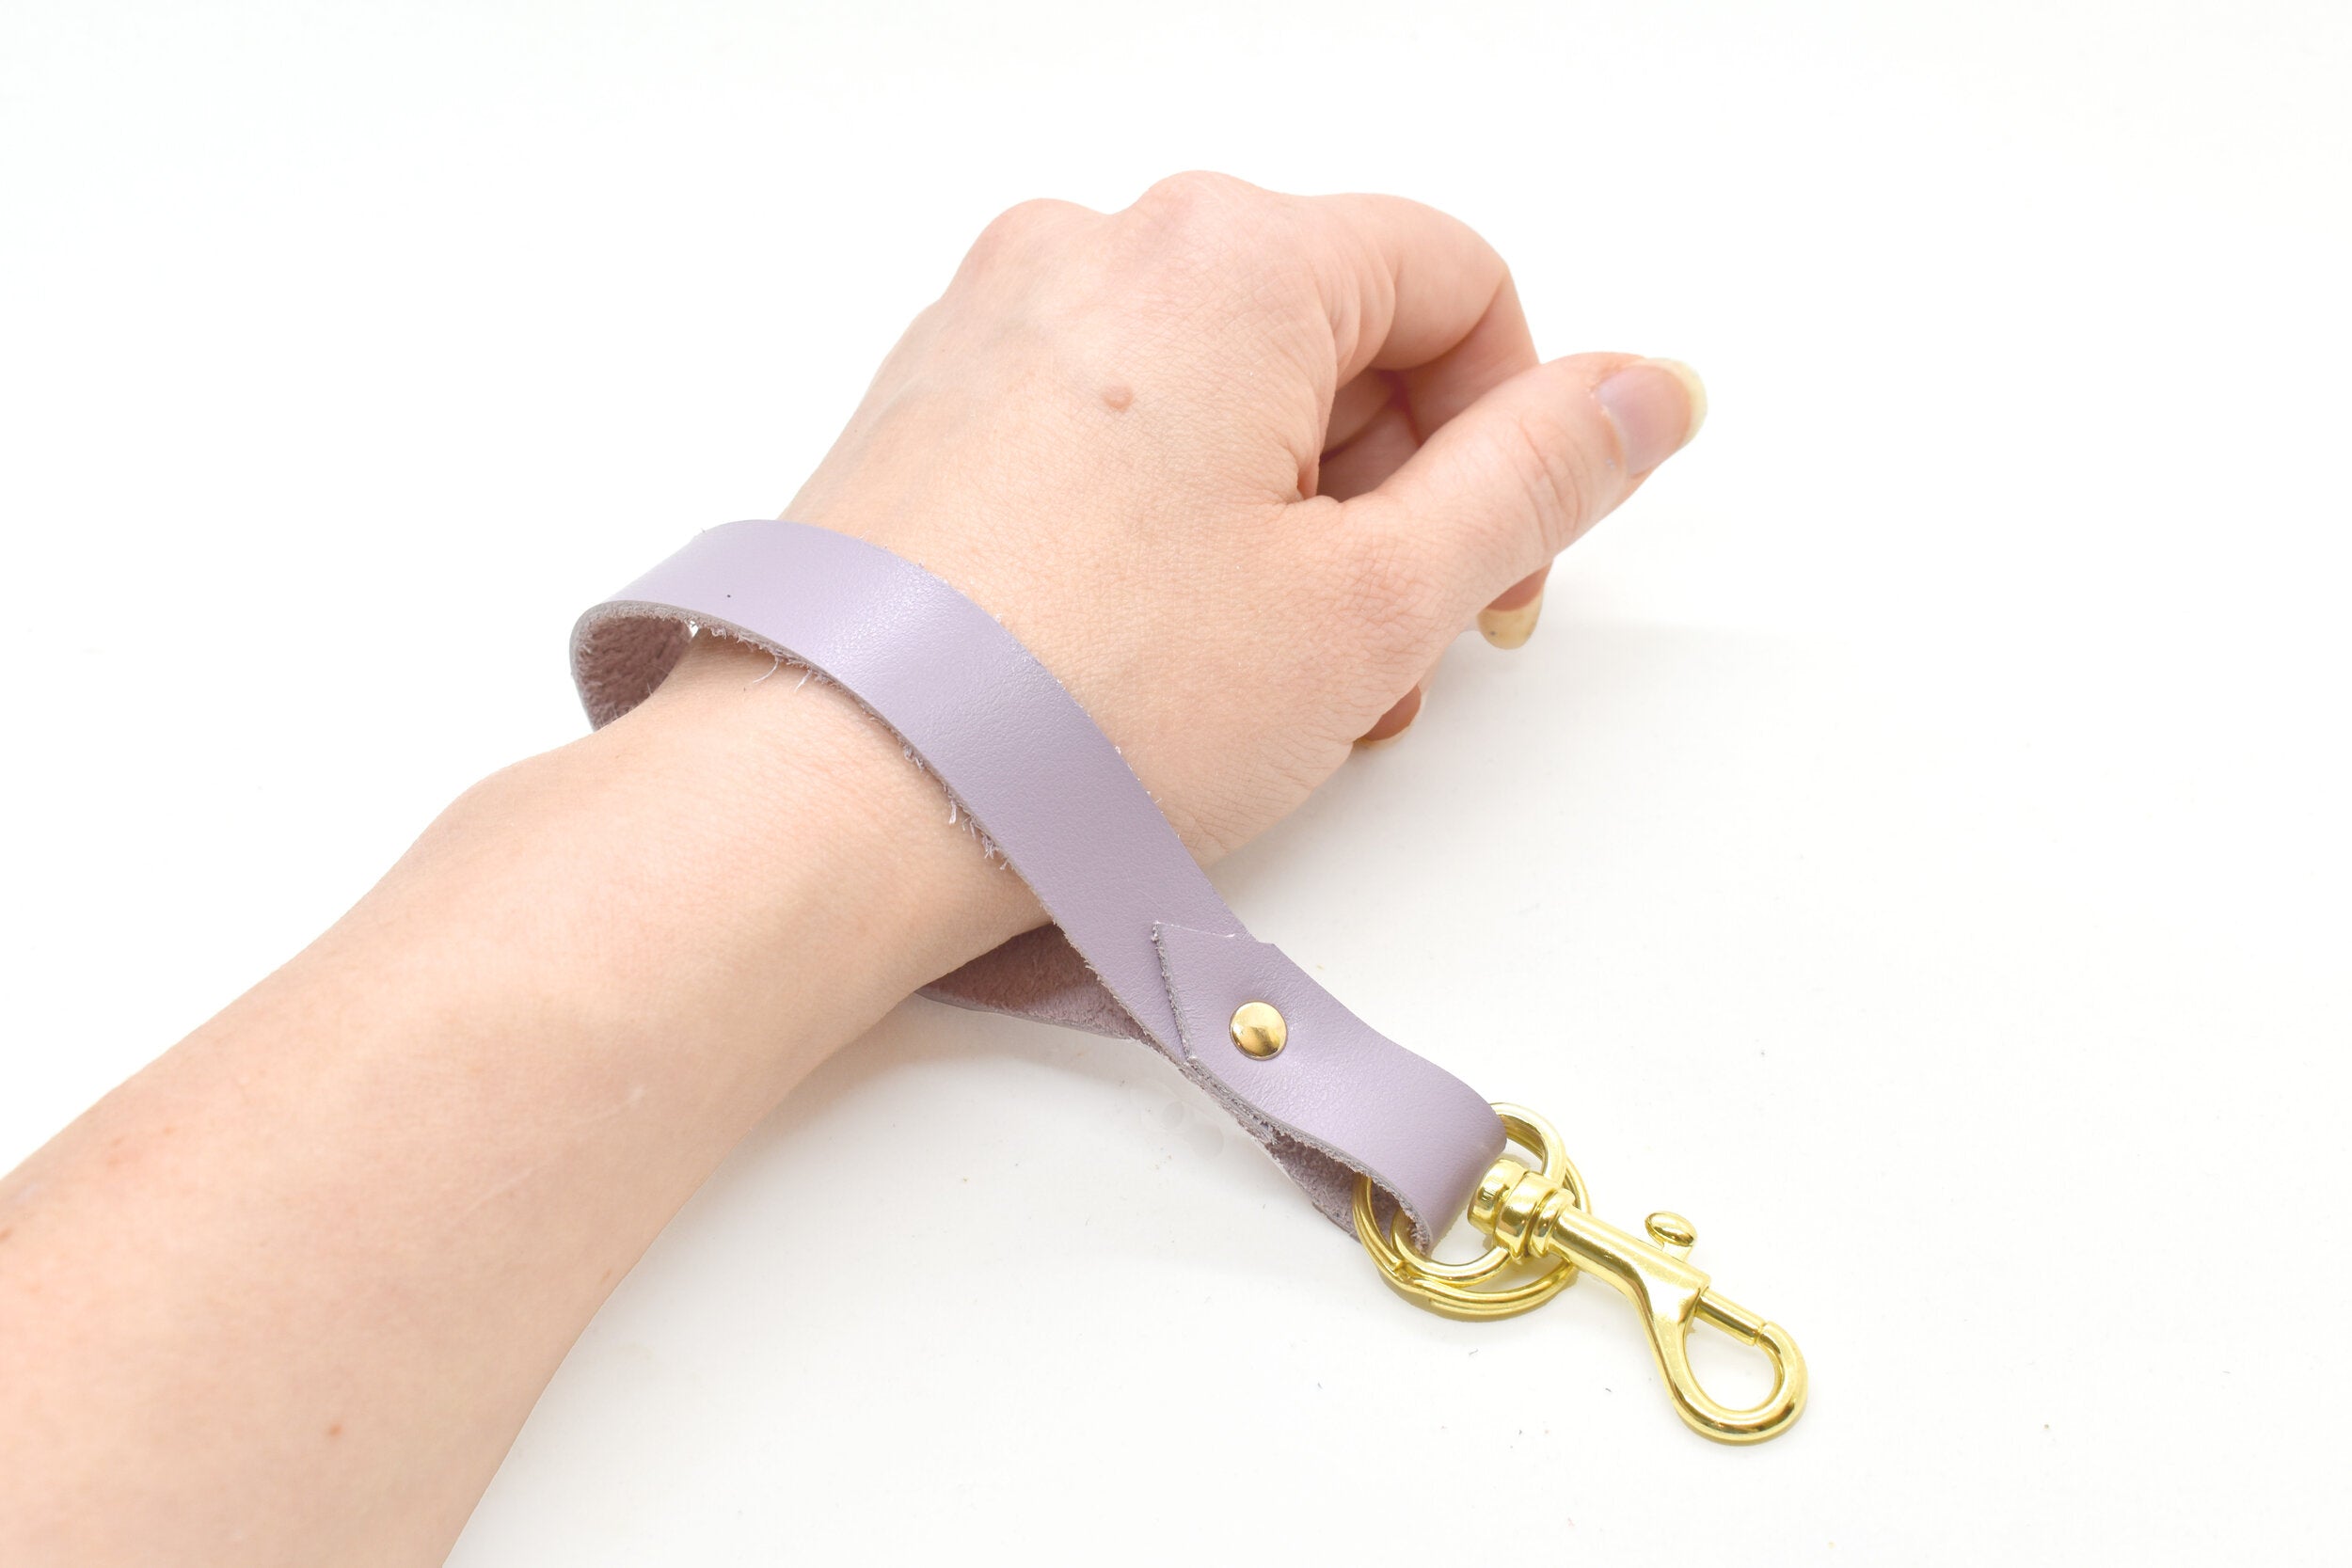 The Premium Leather KEYPER® key ring wristlet